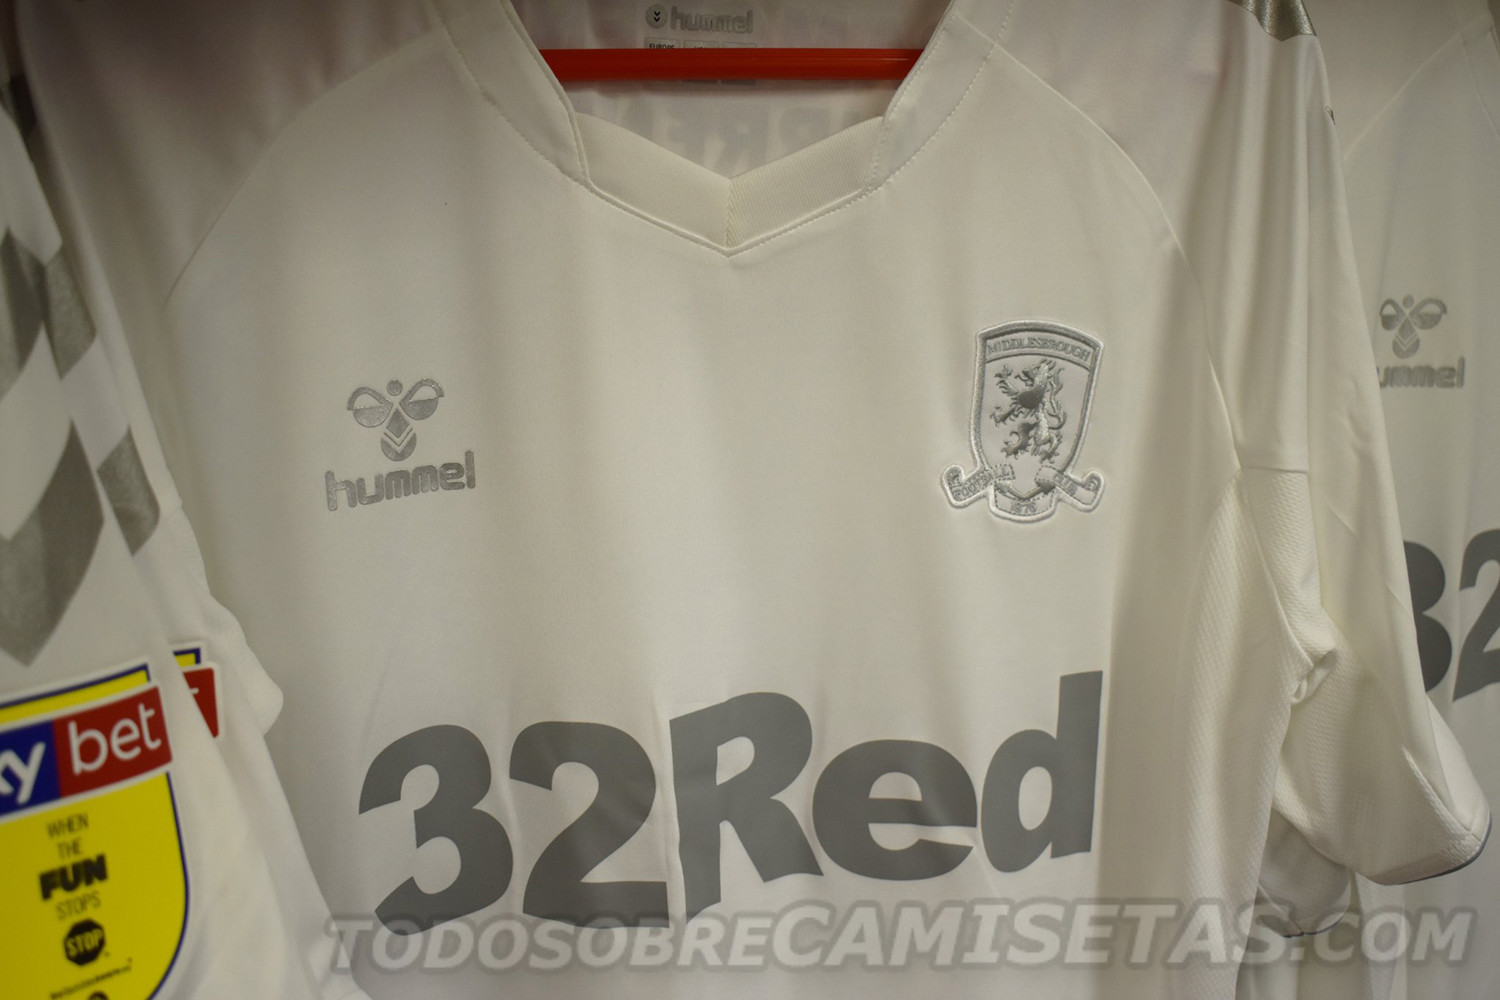 Middlesbrough FC Hummel Third Kit 2018-19